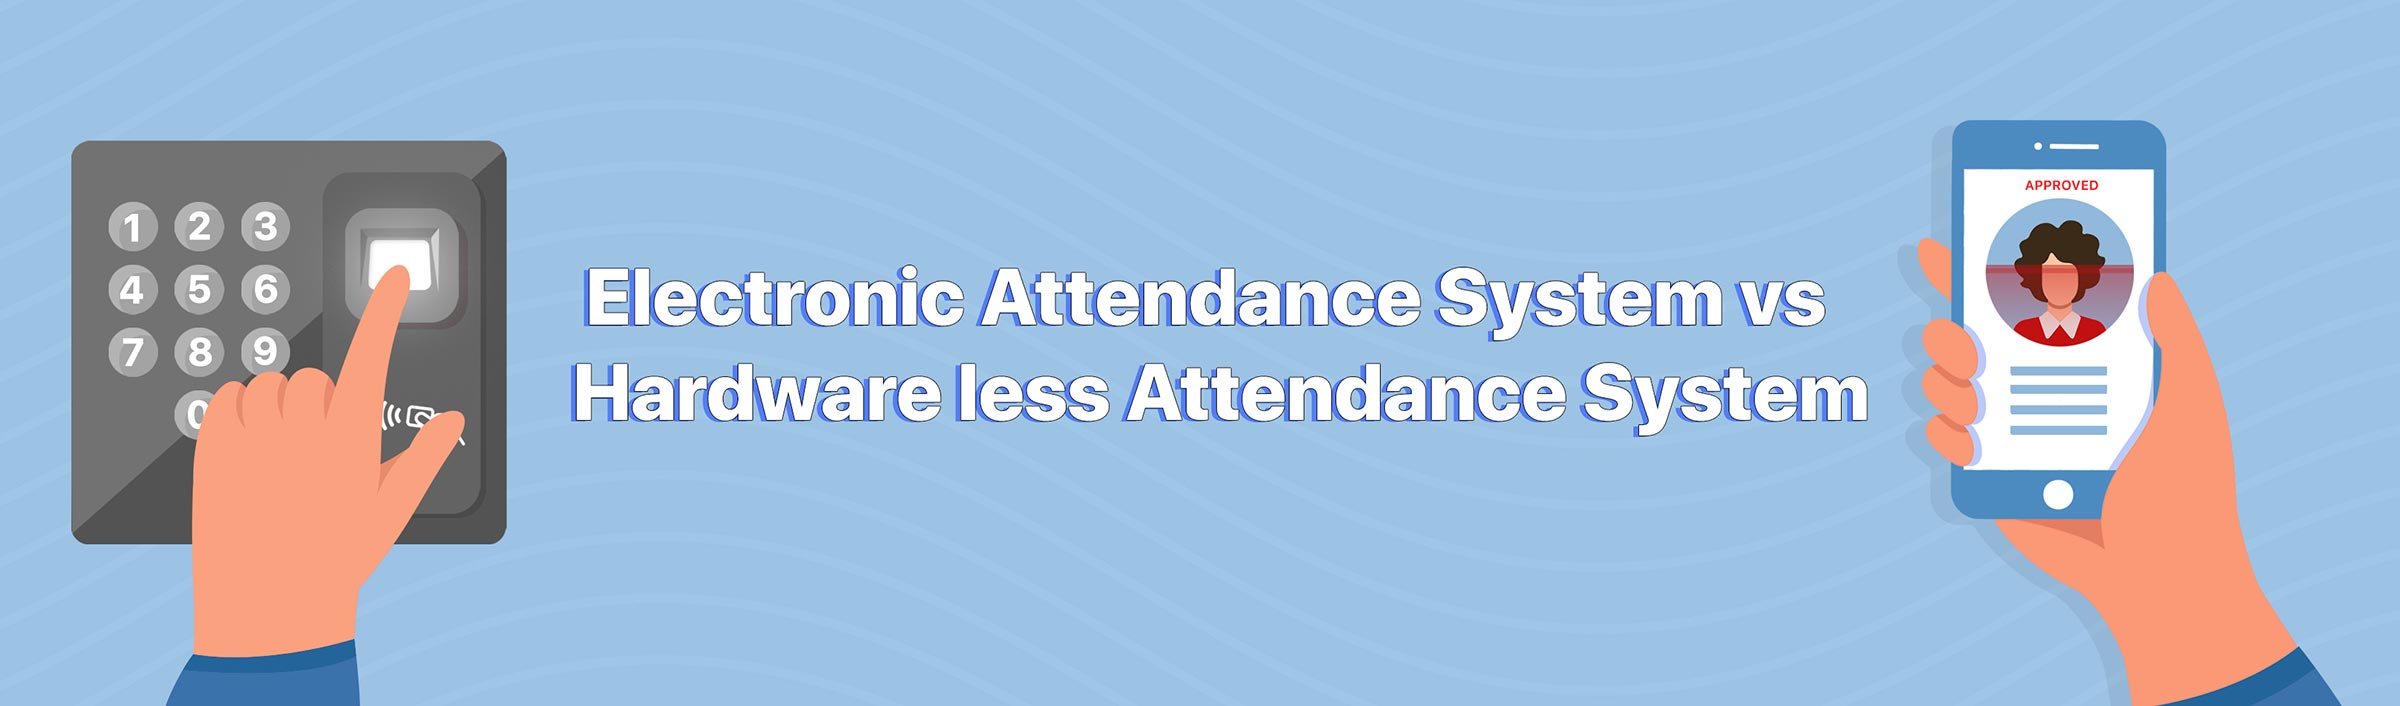 Electronic Attendance System vs Hardware less Attendance System